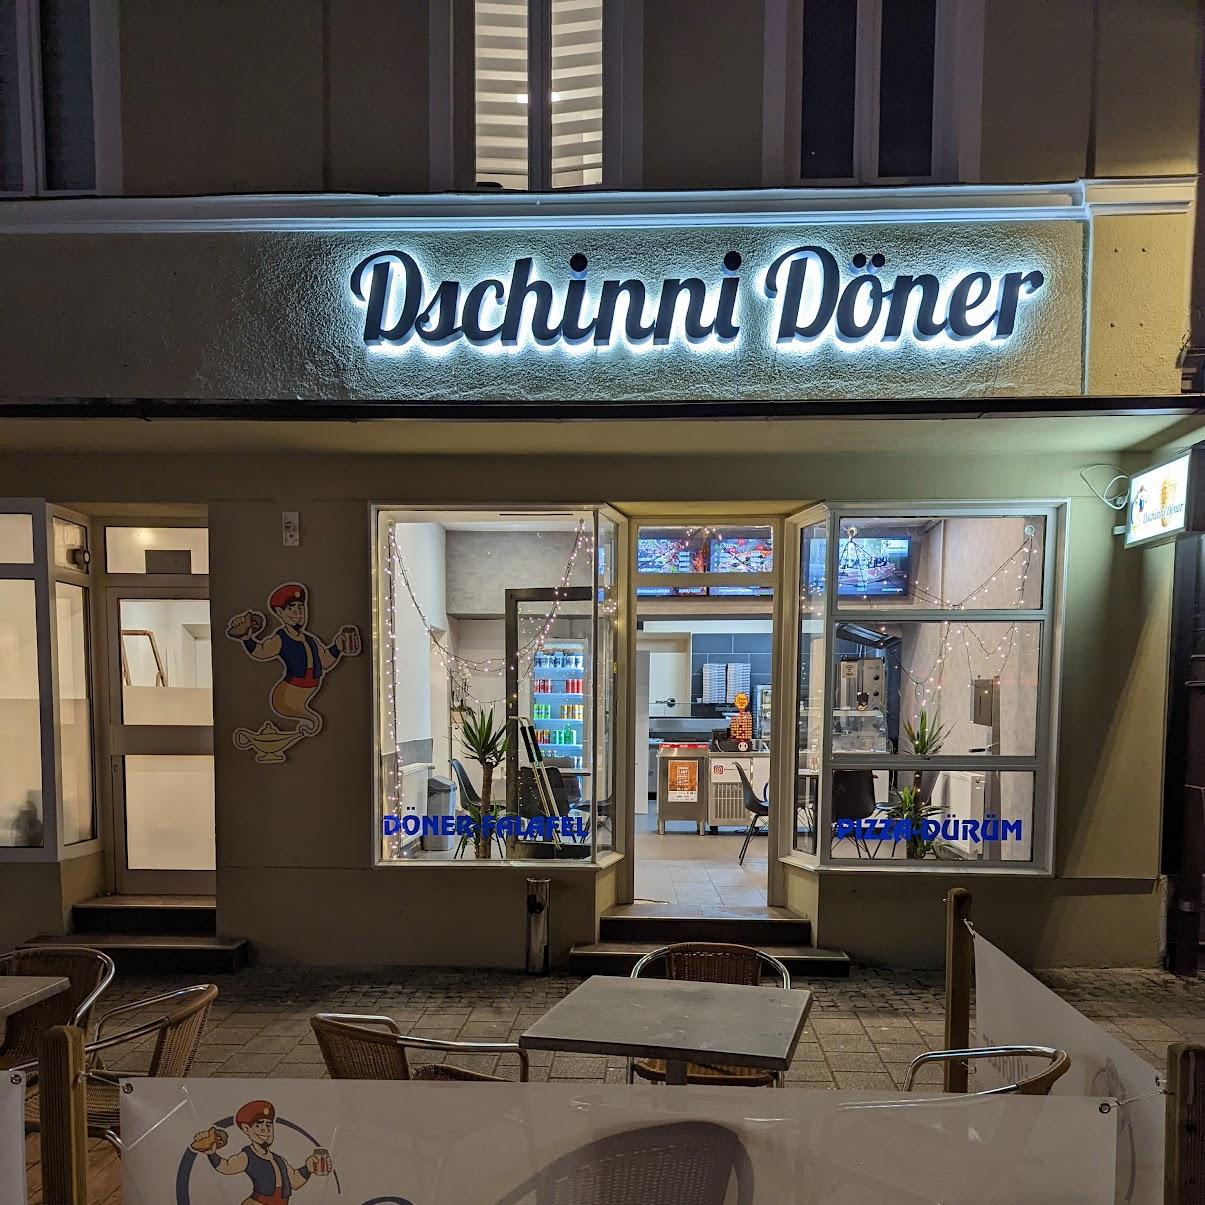 Restaurant "Dschinni Döner" in Ingolstadt